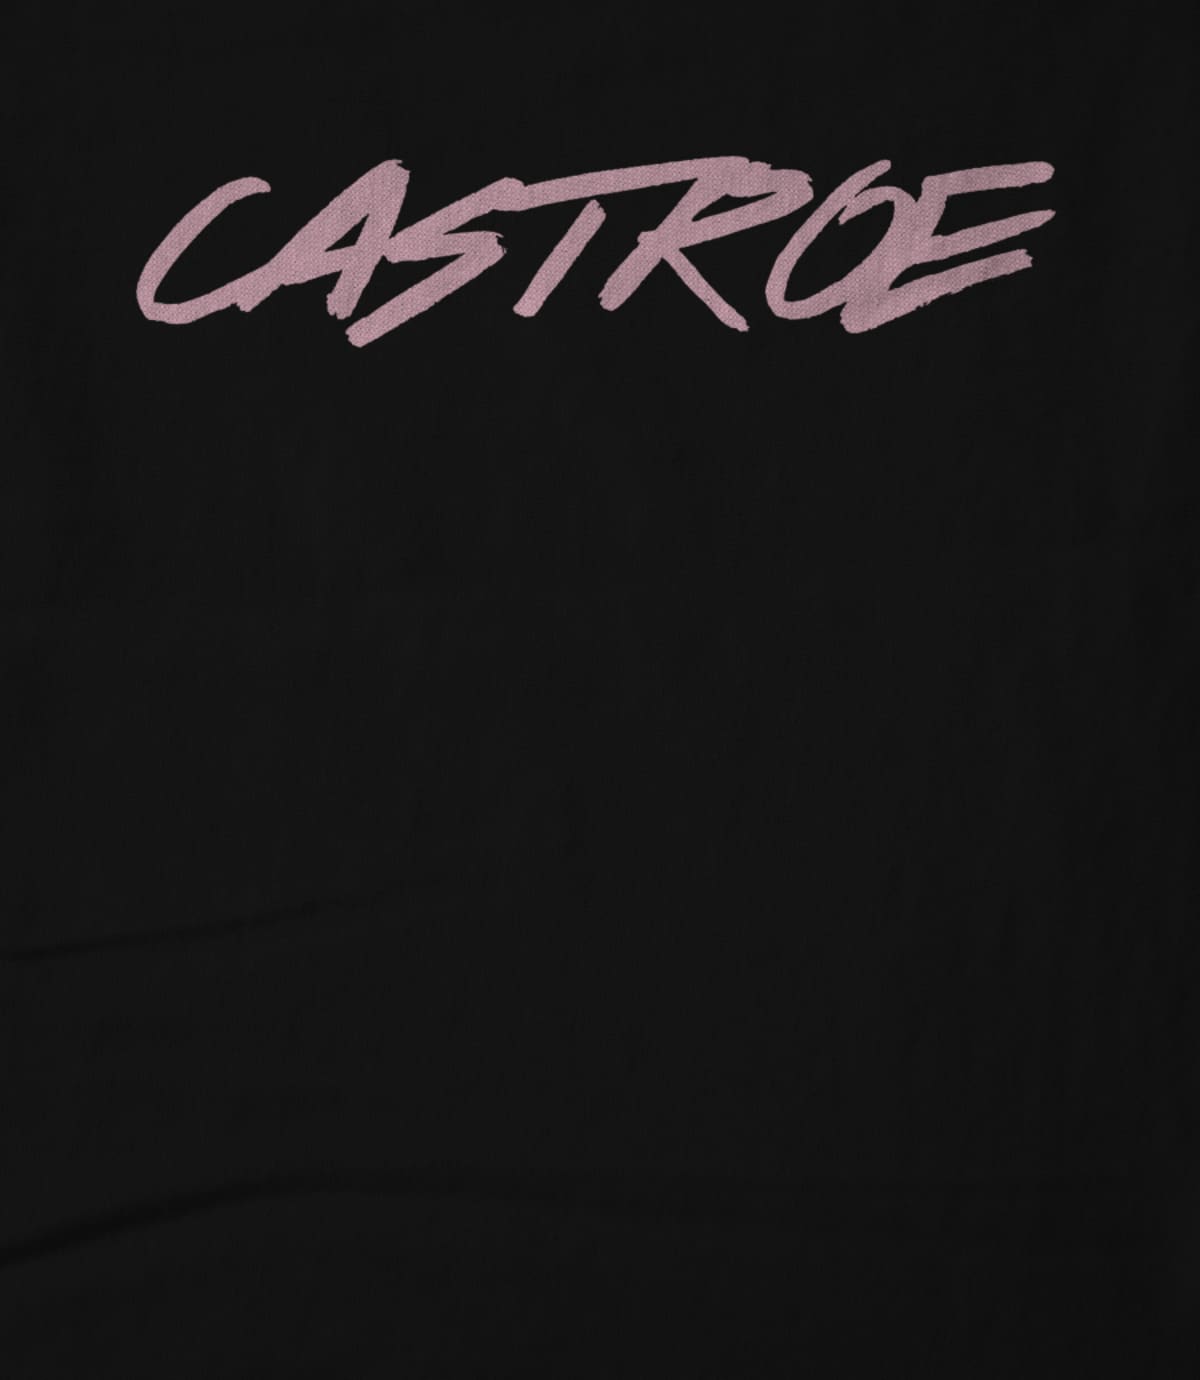 Castroe castroe logo 1549795073